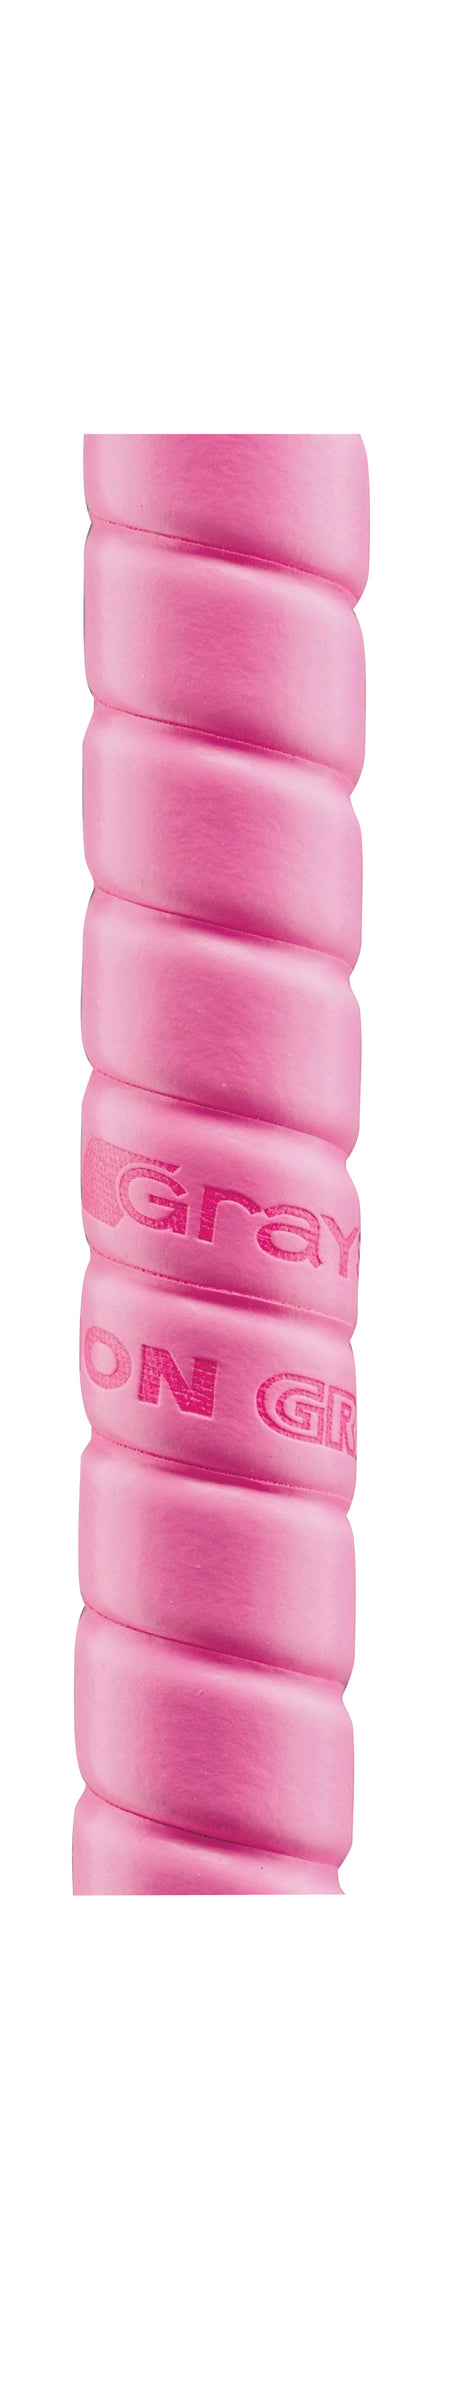 Grays Cushion Grip